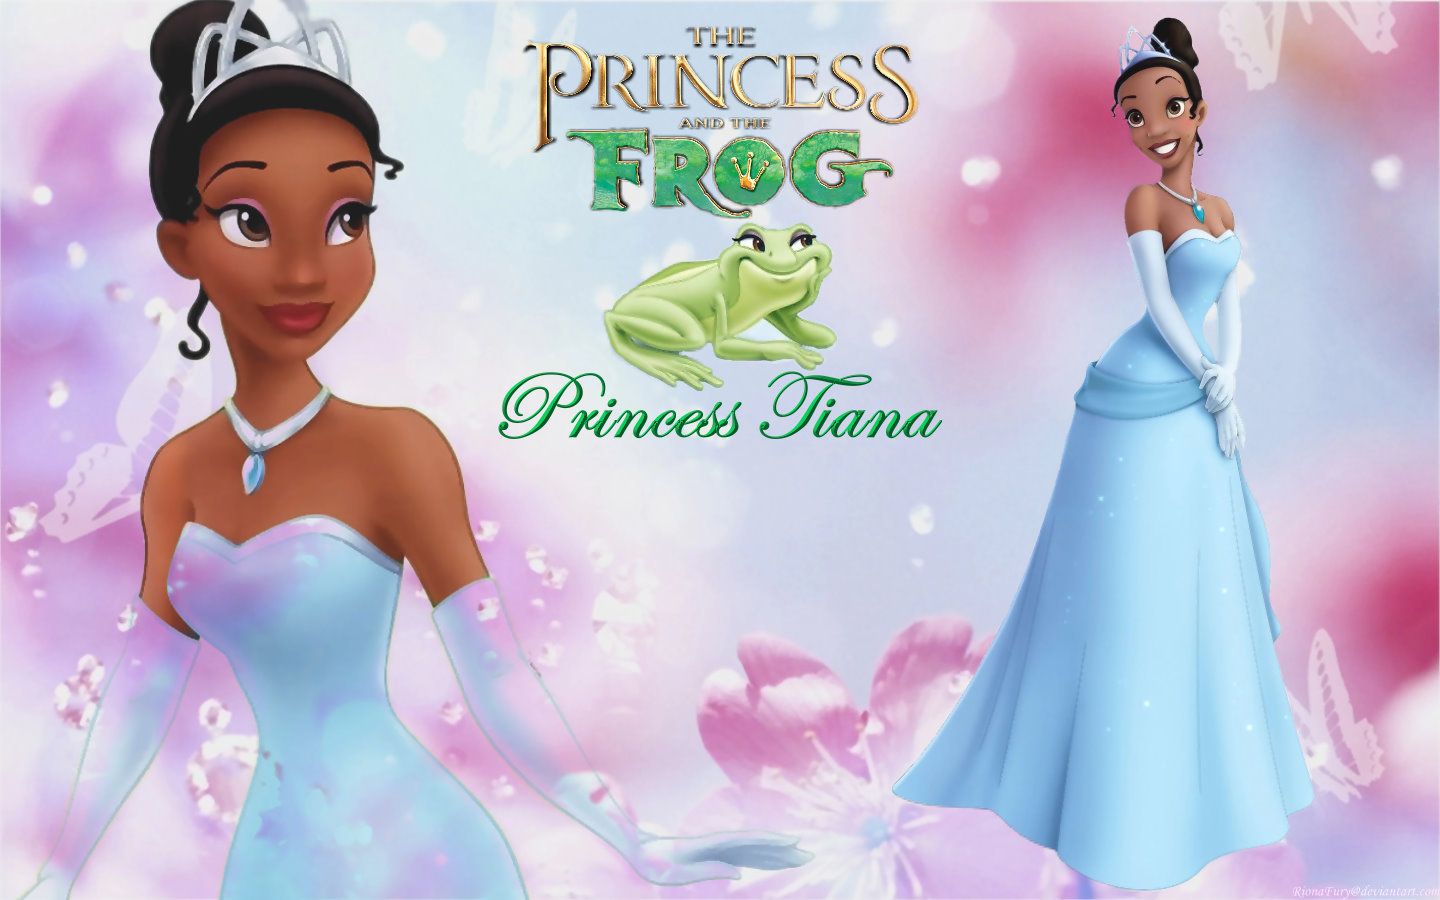 Princess Tiana - The Princess and the Frog Wallpaper (23744461 ...